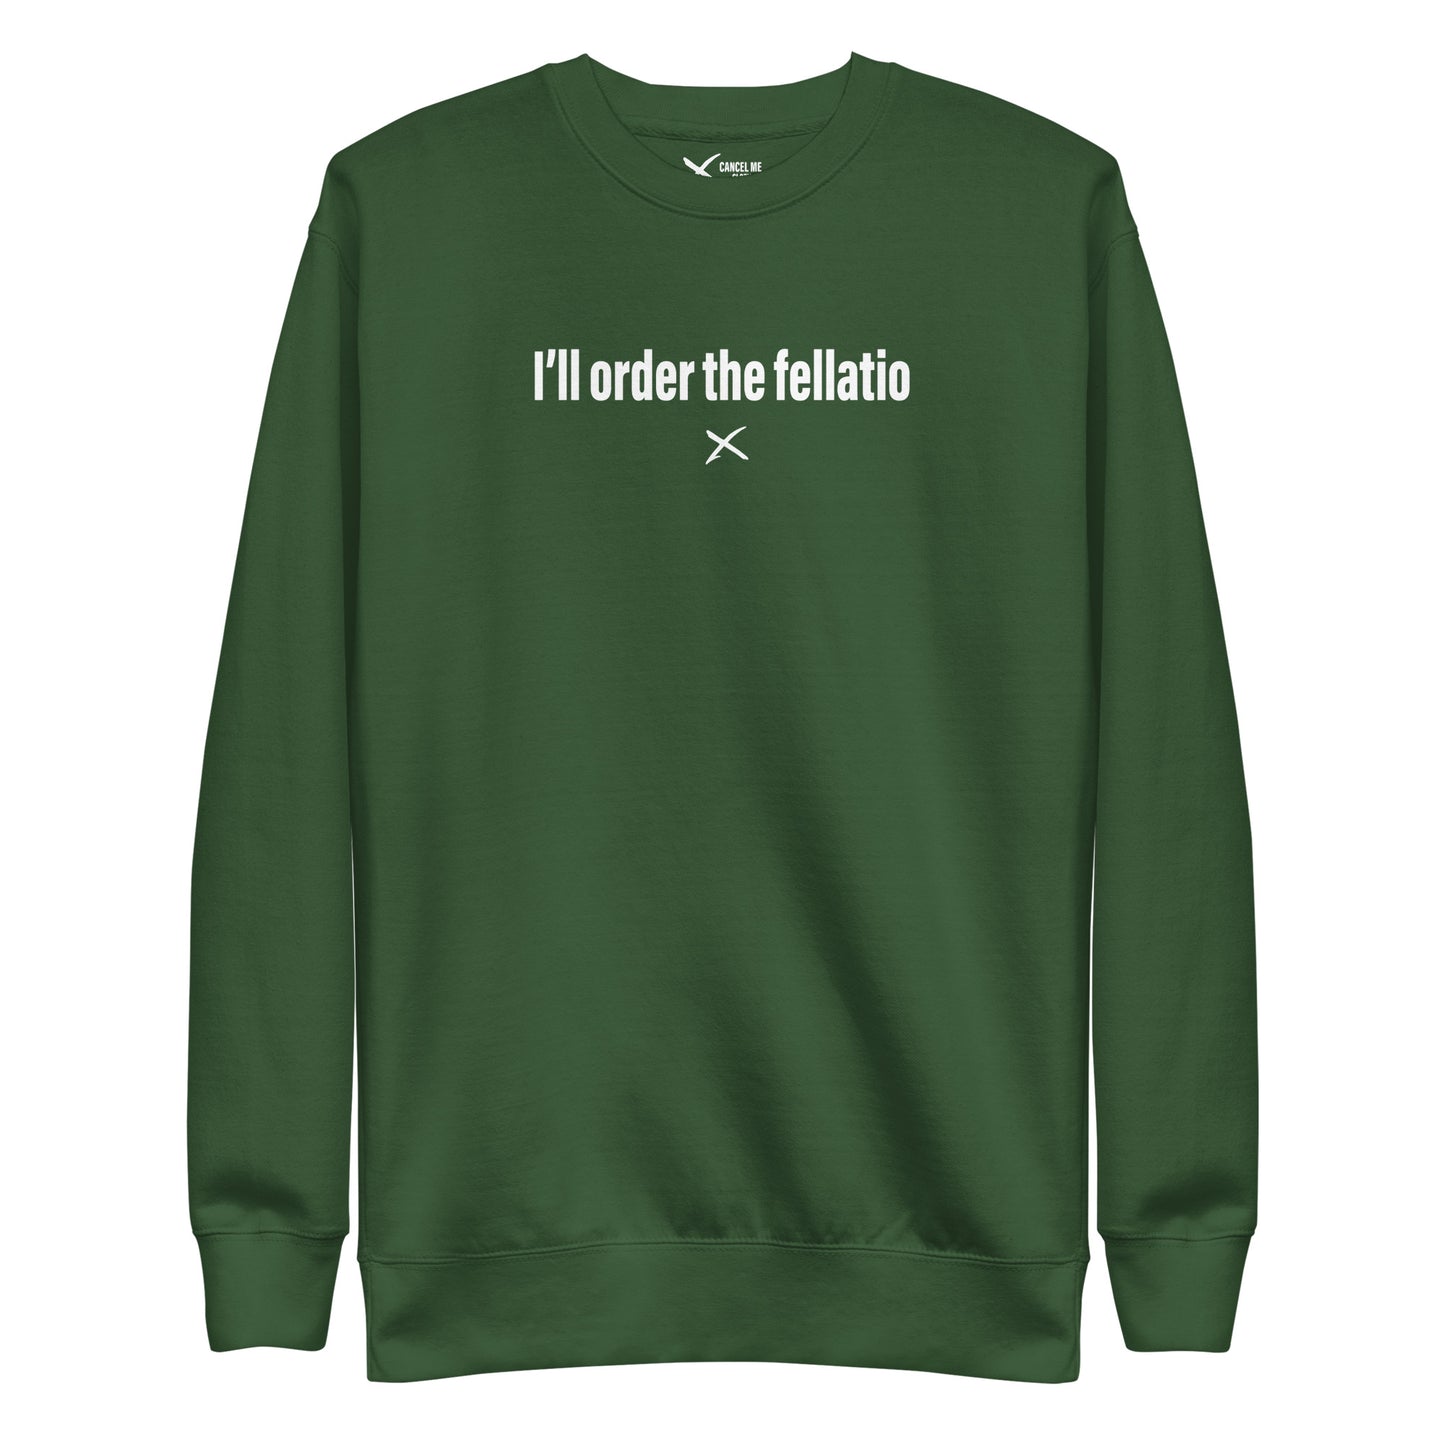 I'll order the fellatio - Sweatshirt